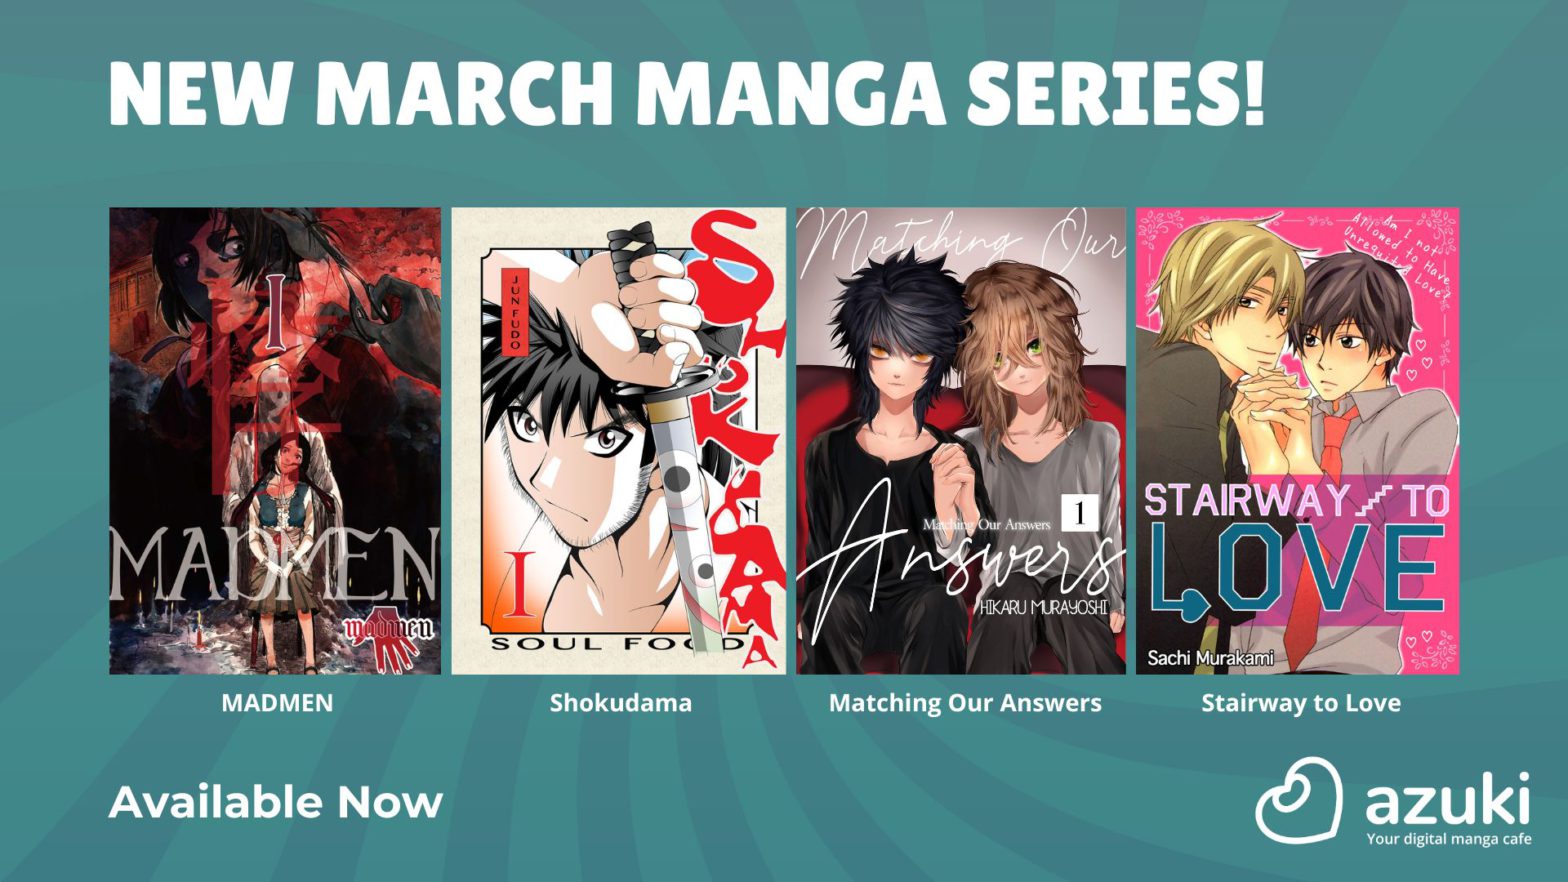 New March Manga Series. MADMEN, Shokudama, Matching Our Answers, and Stairway to Love. Azuki.